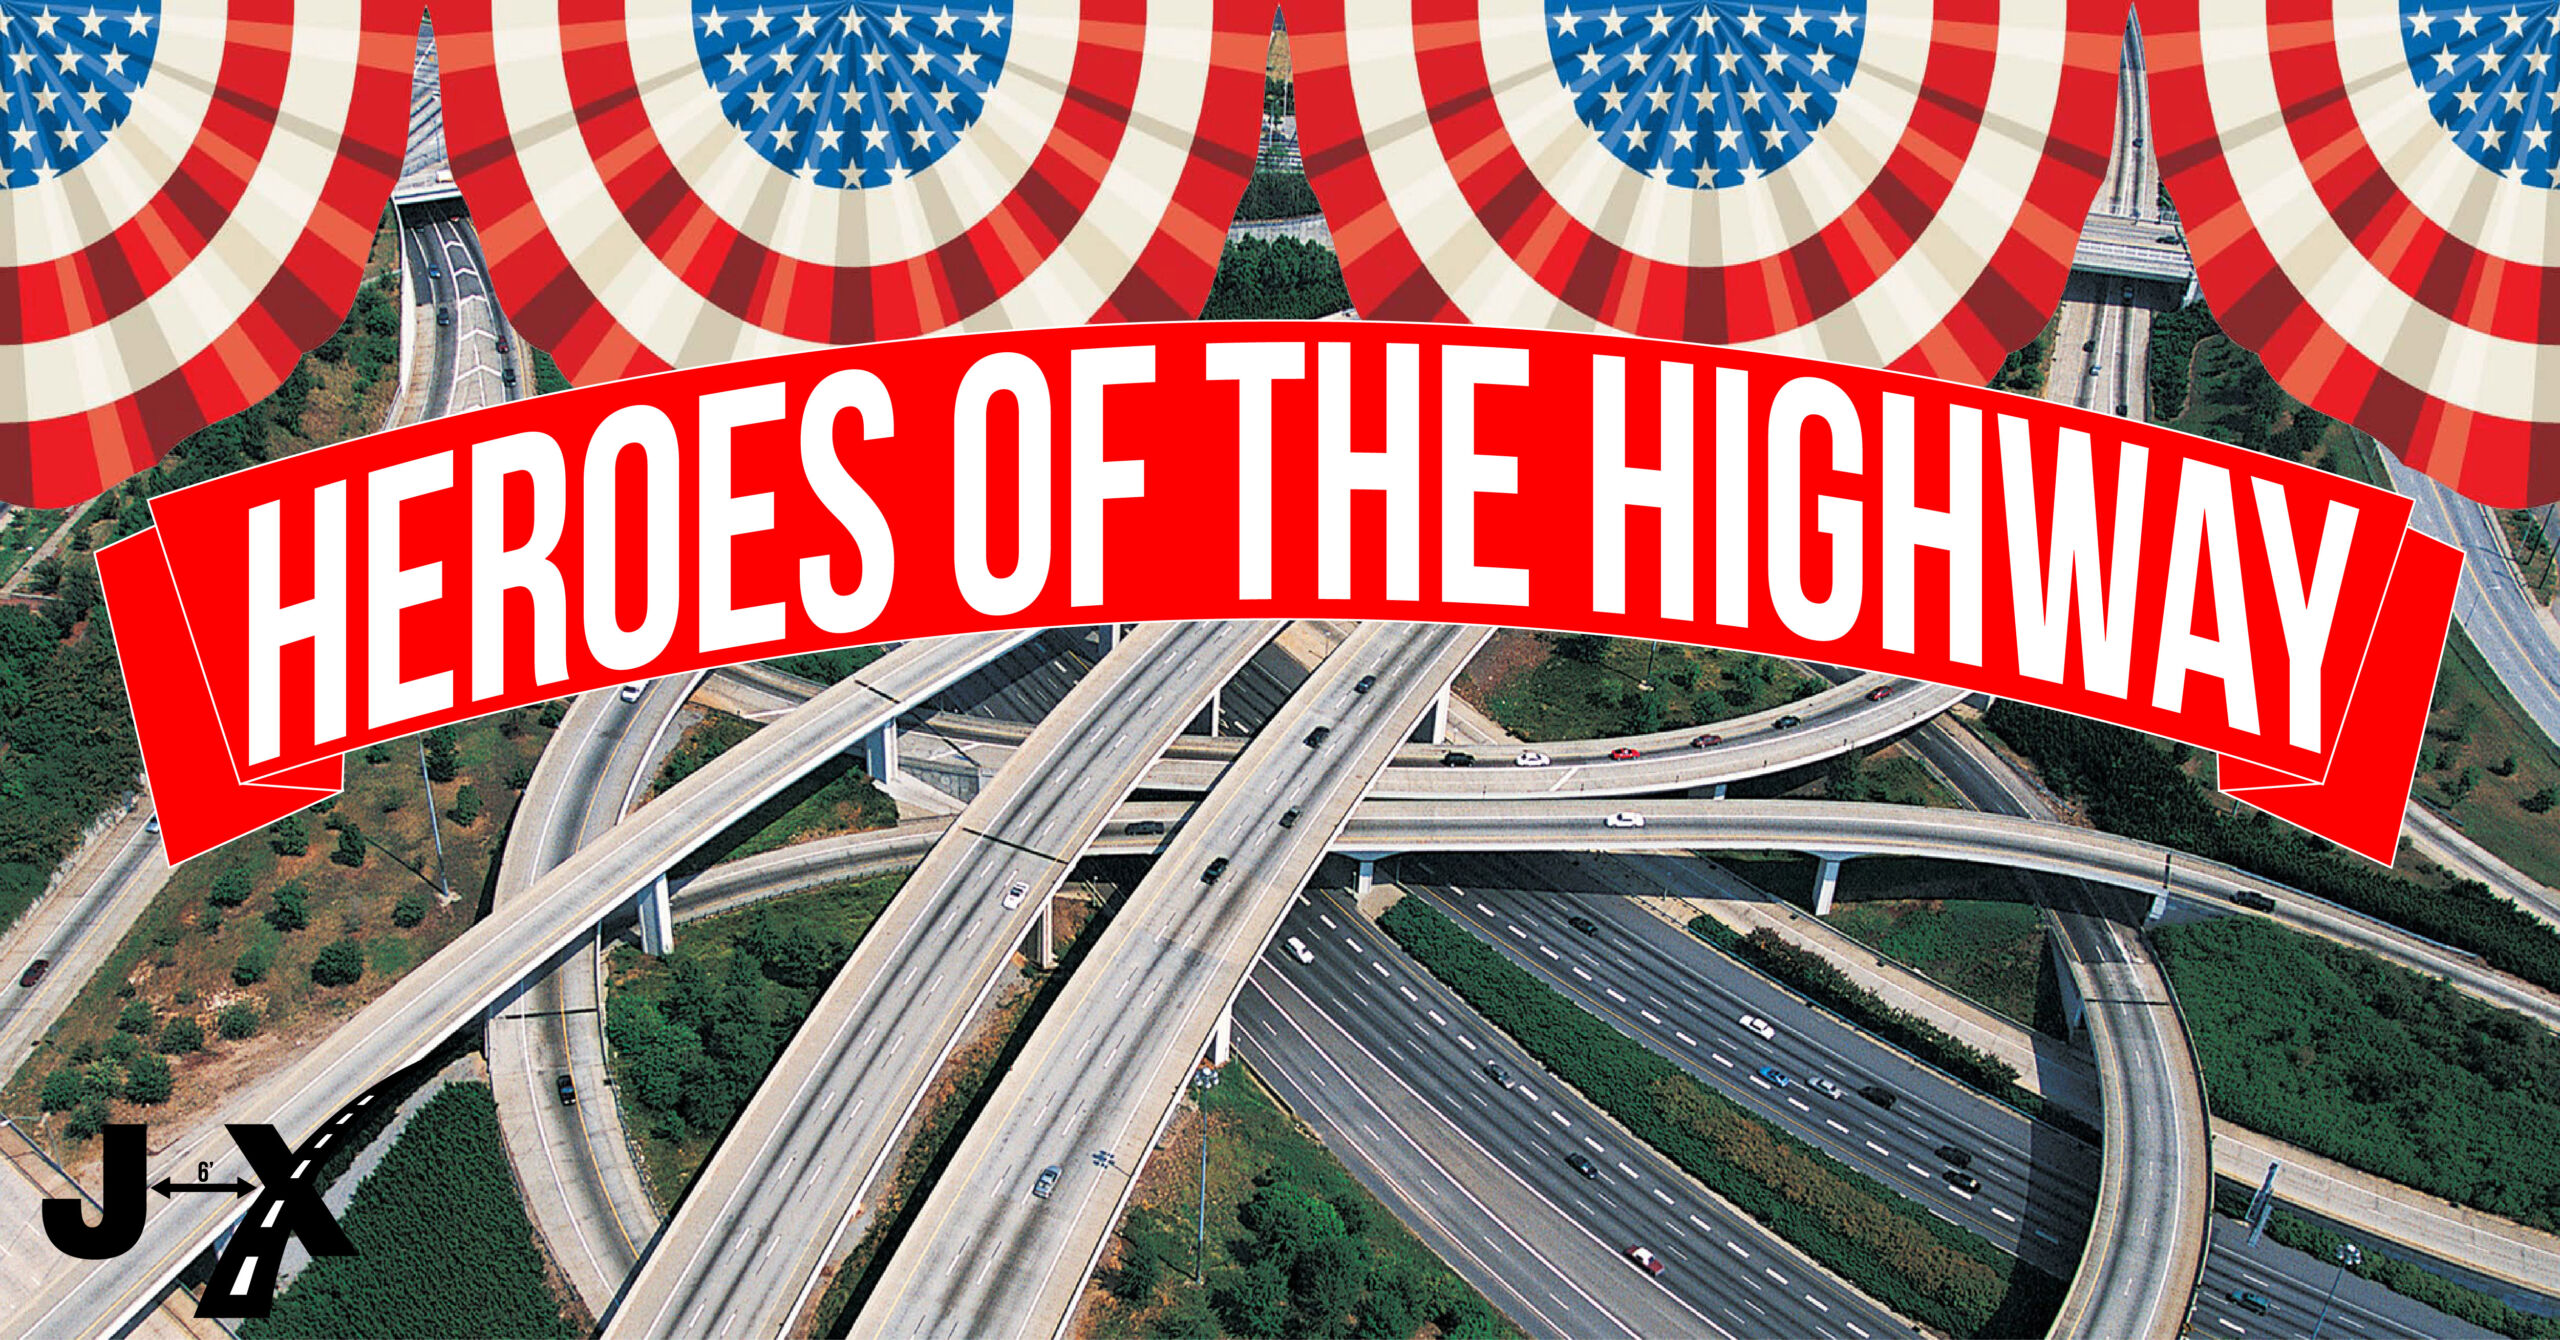 heroes of the highway blog header. American flag and highway image